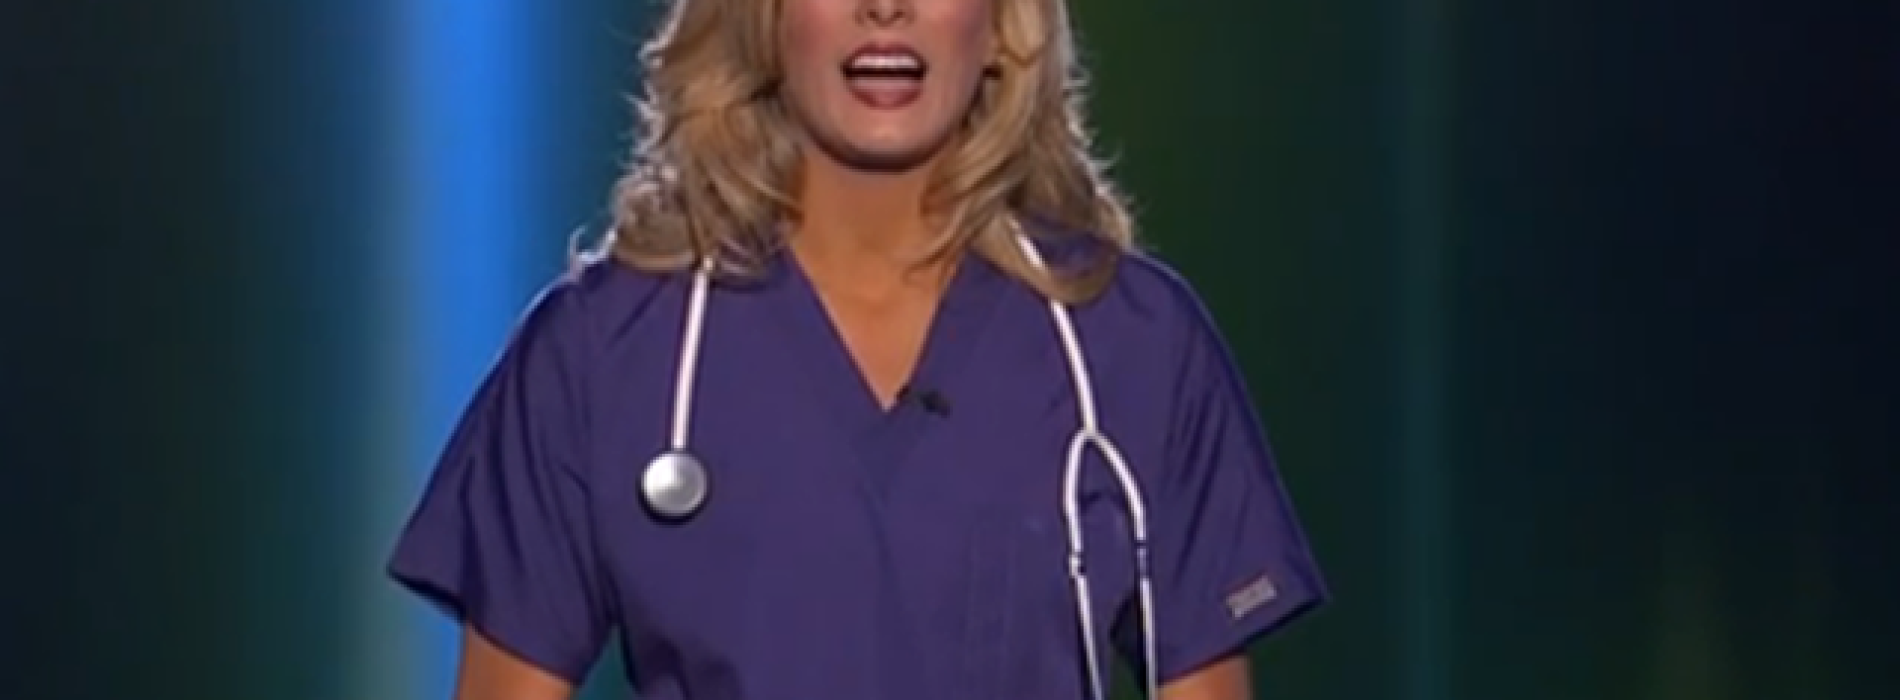 [UPDATED] ‘The View’ hosts mock Miss America contestant’s nurse monologue, face backlash as #nursesunite